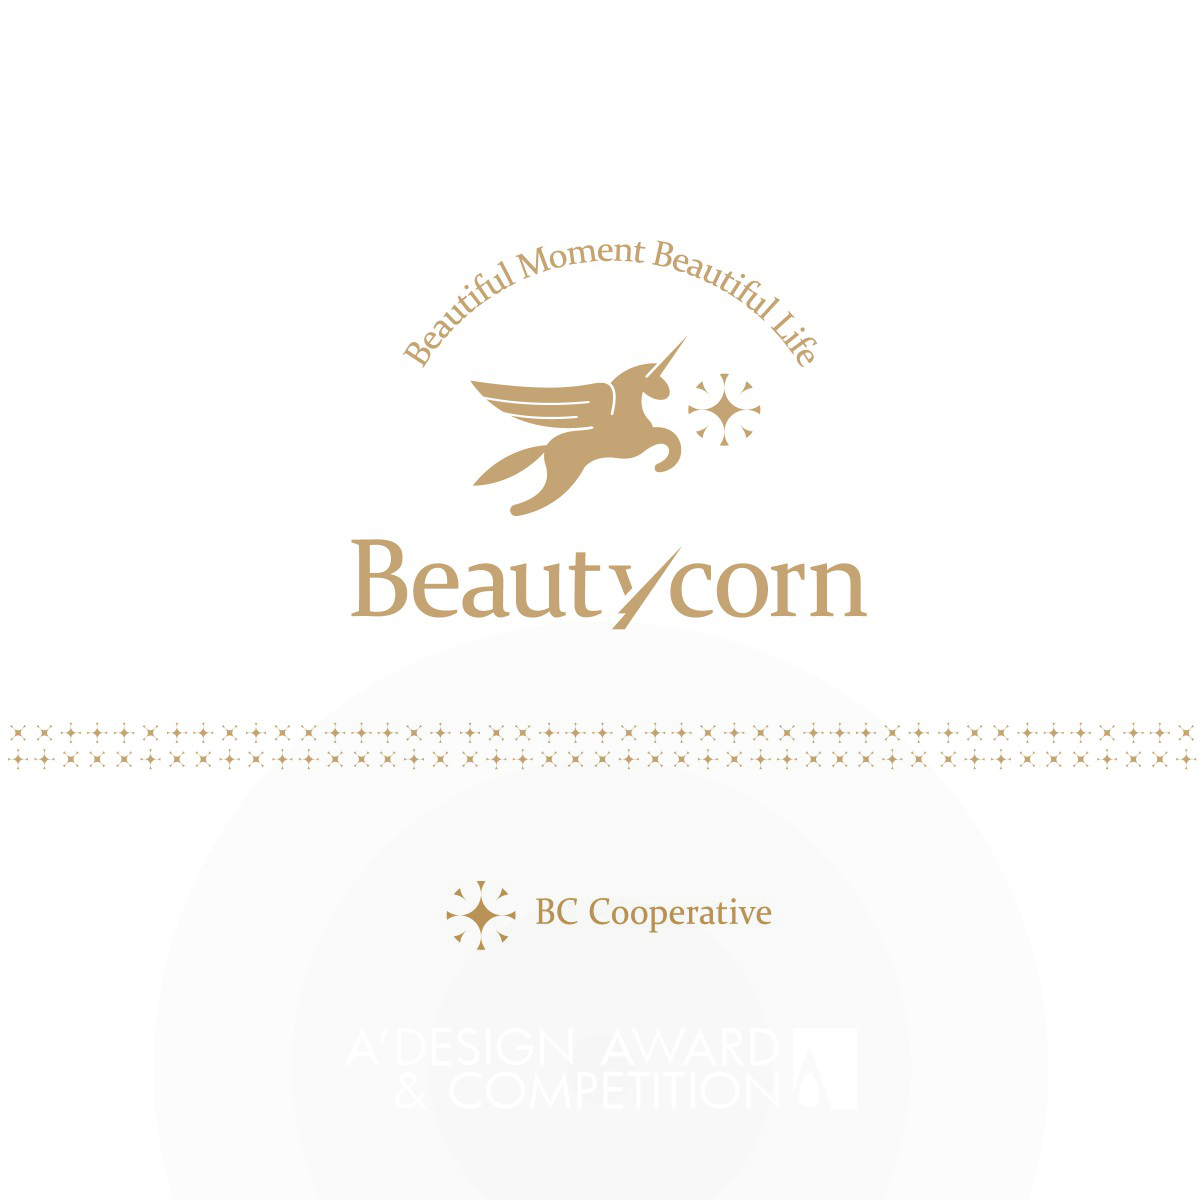 BCC and Beautycorn